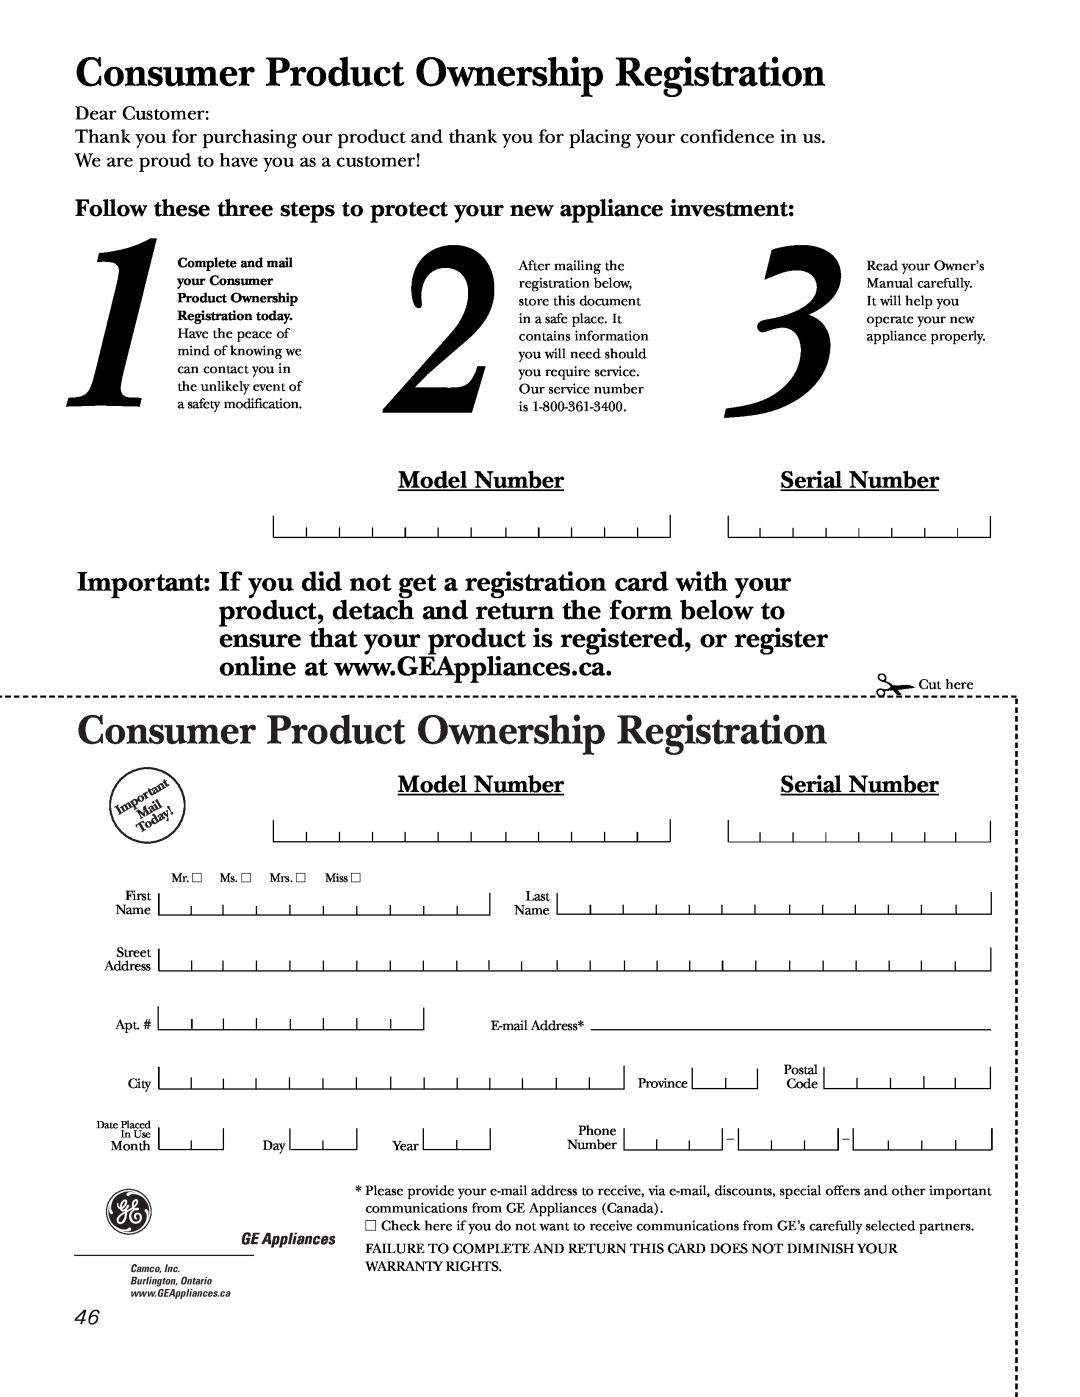 GE JCB968, JCB905 Model Number, Serial Number, Consumer Product Ownership Registration, GE Appliances, Complete and mail 